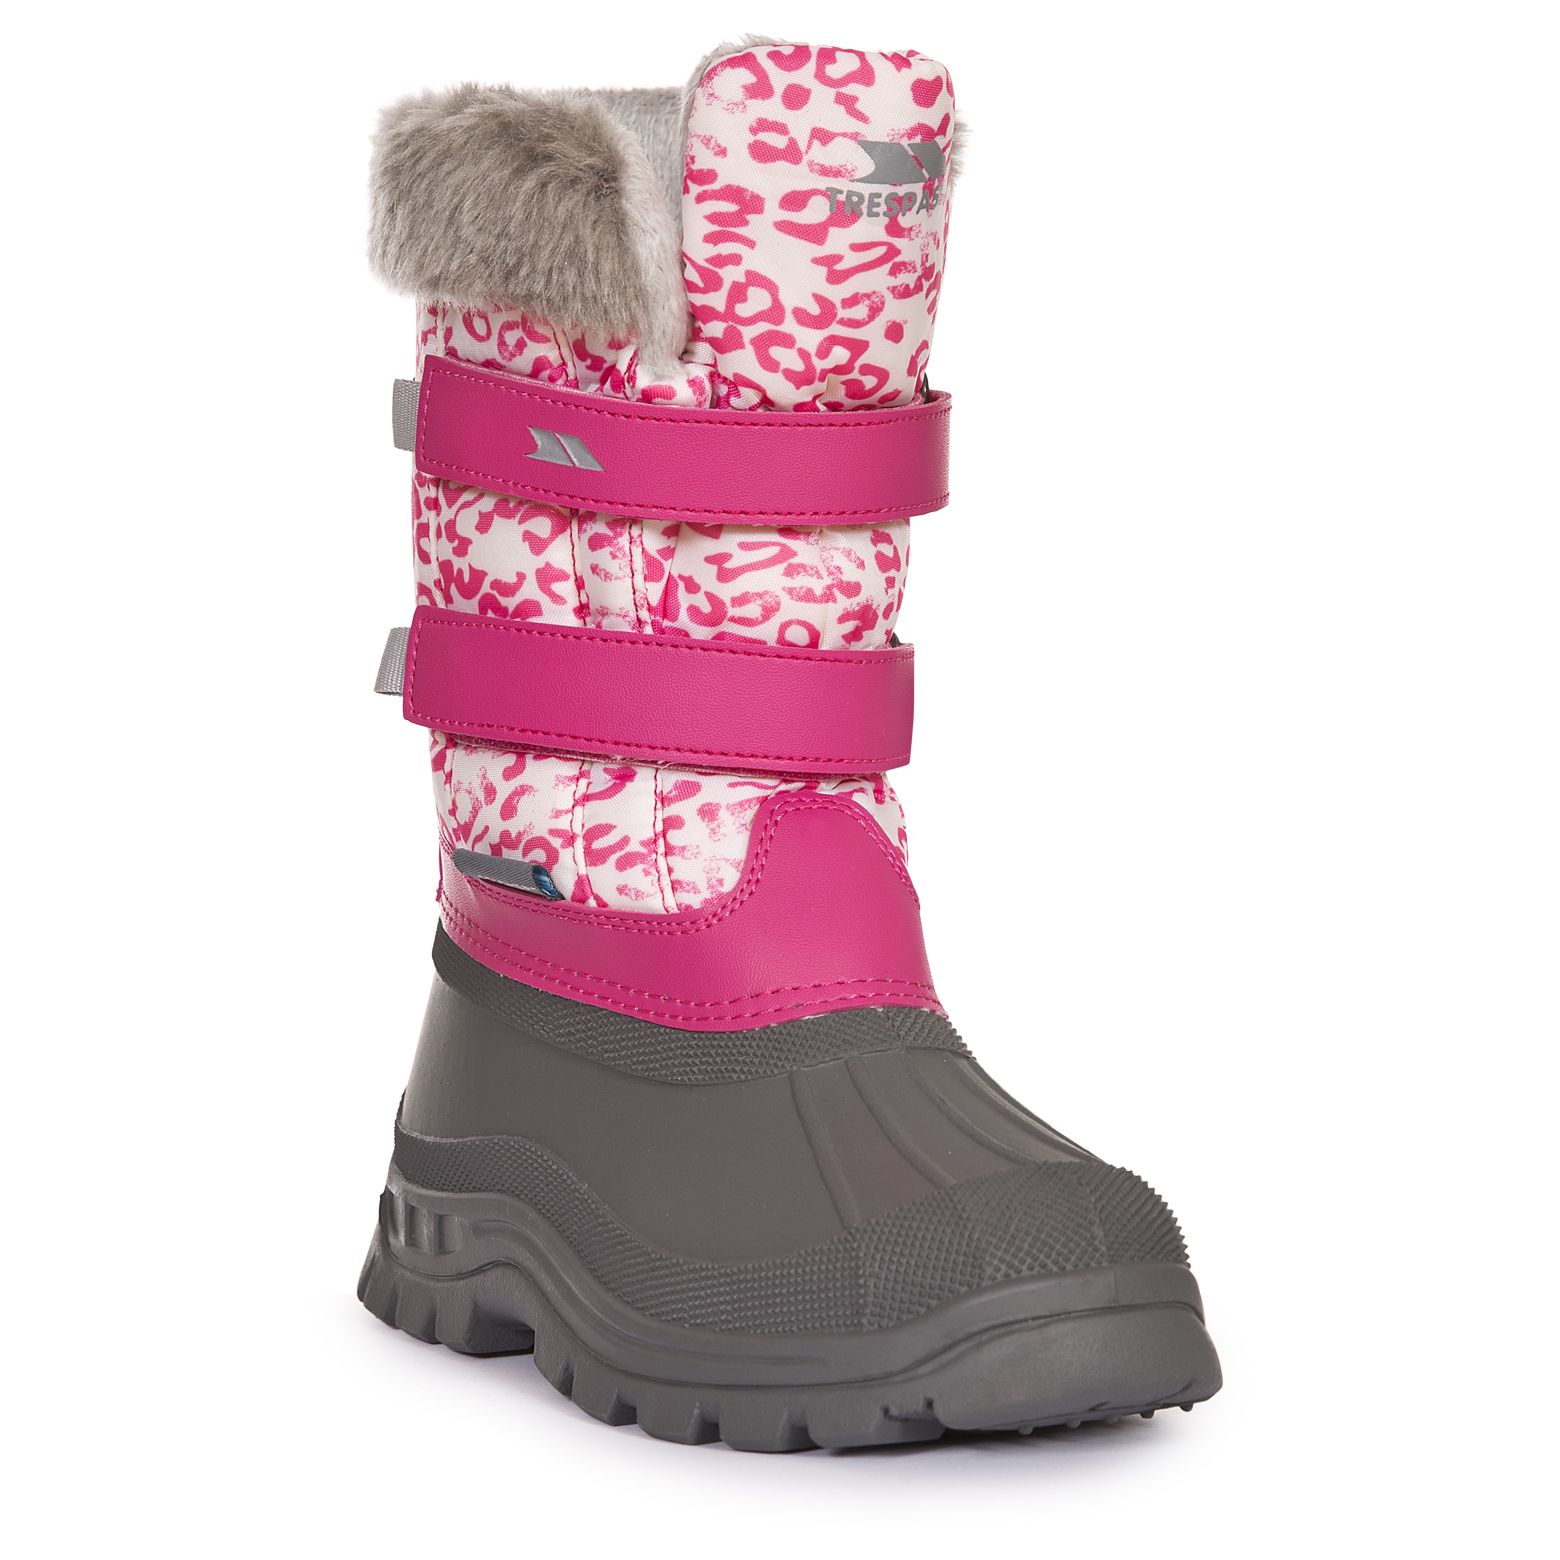 Vause Kids Printed Snow Boots